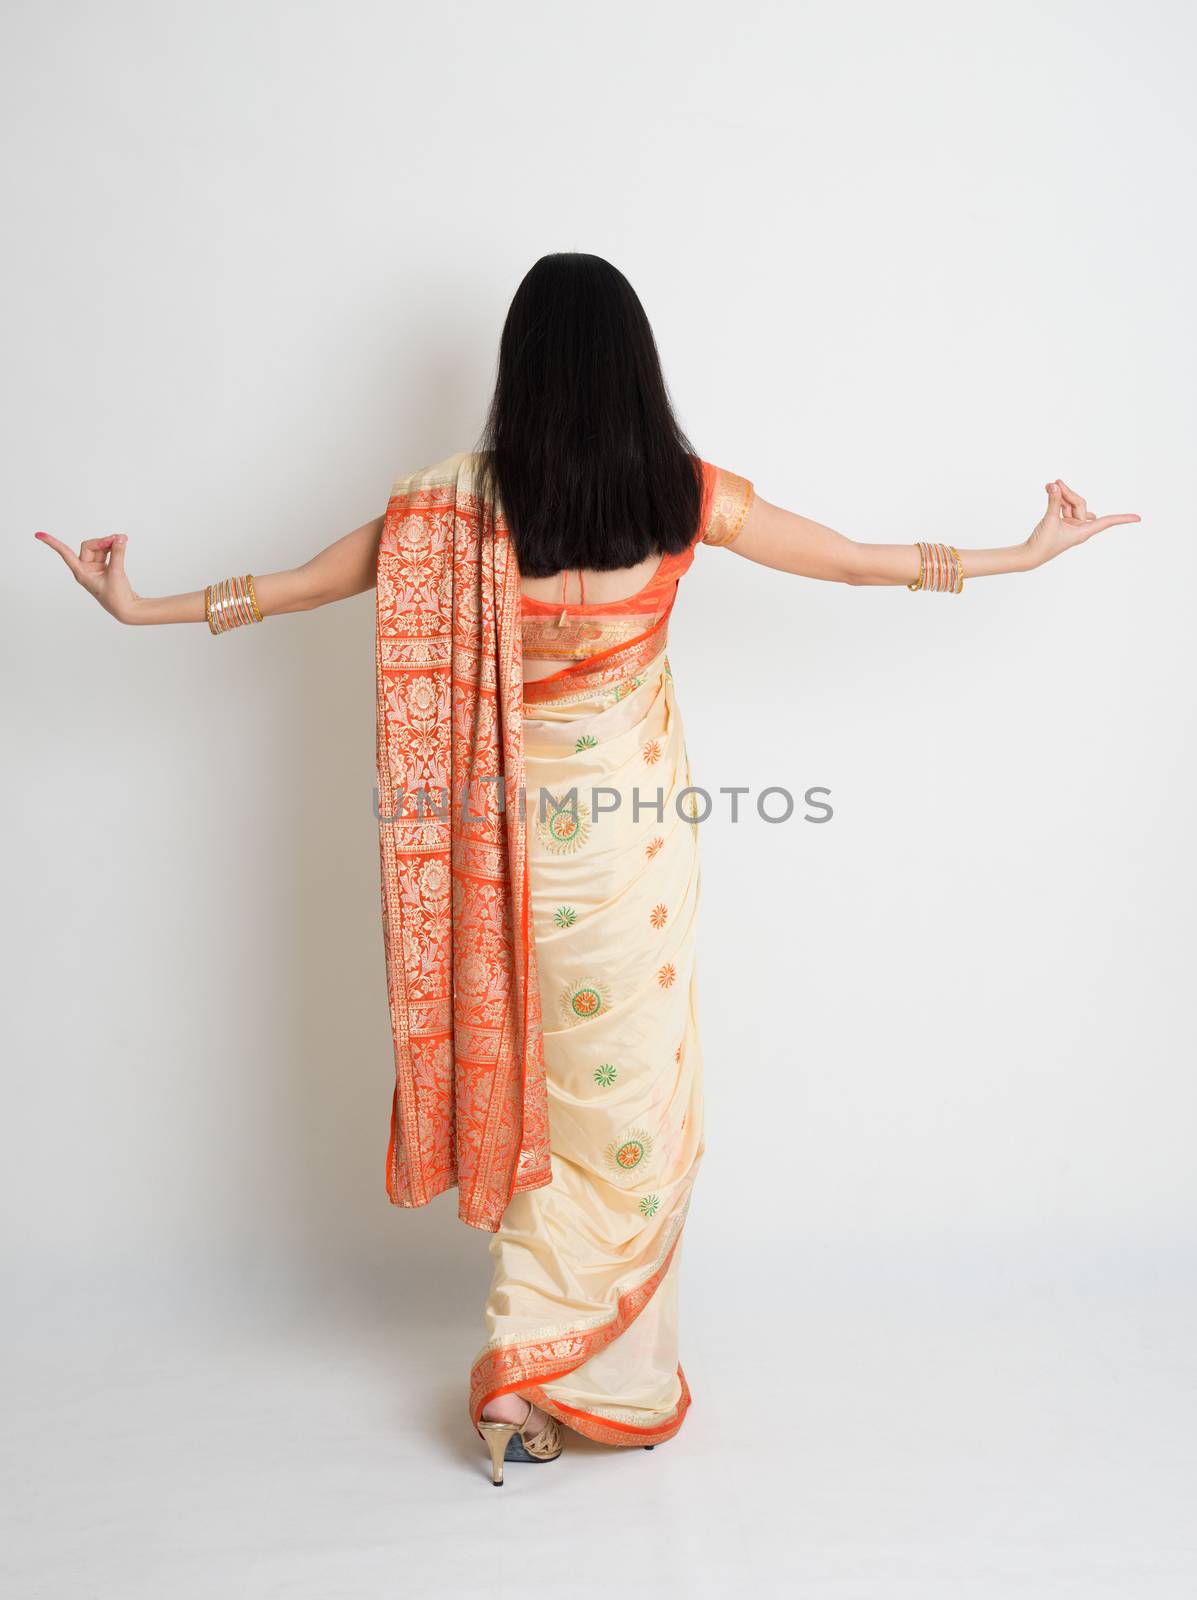 Rear view female in Indian sari dress dancing by szefei